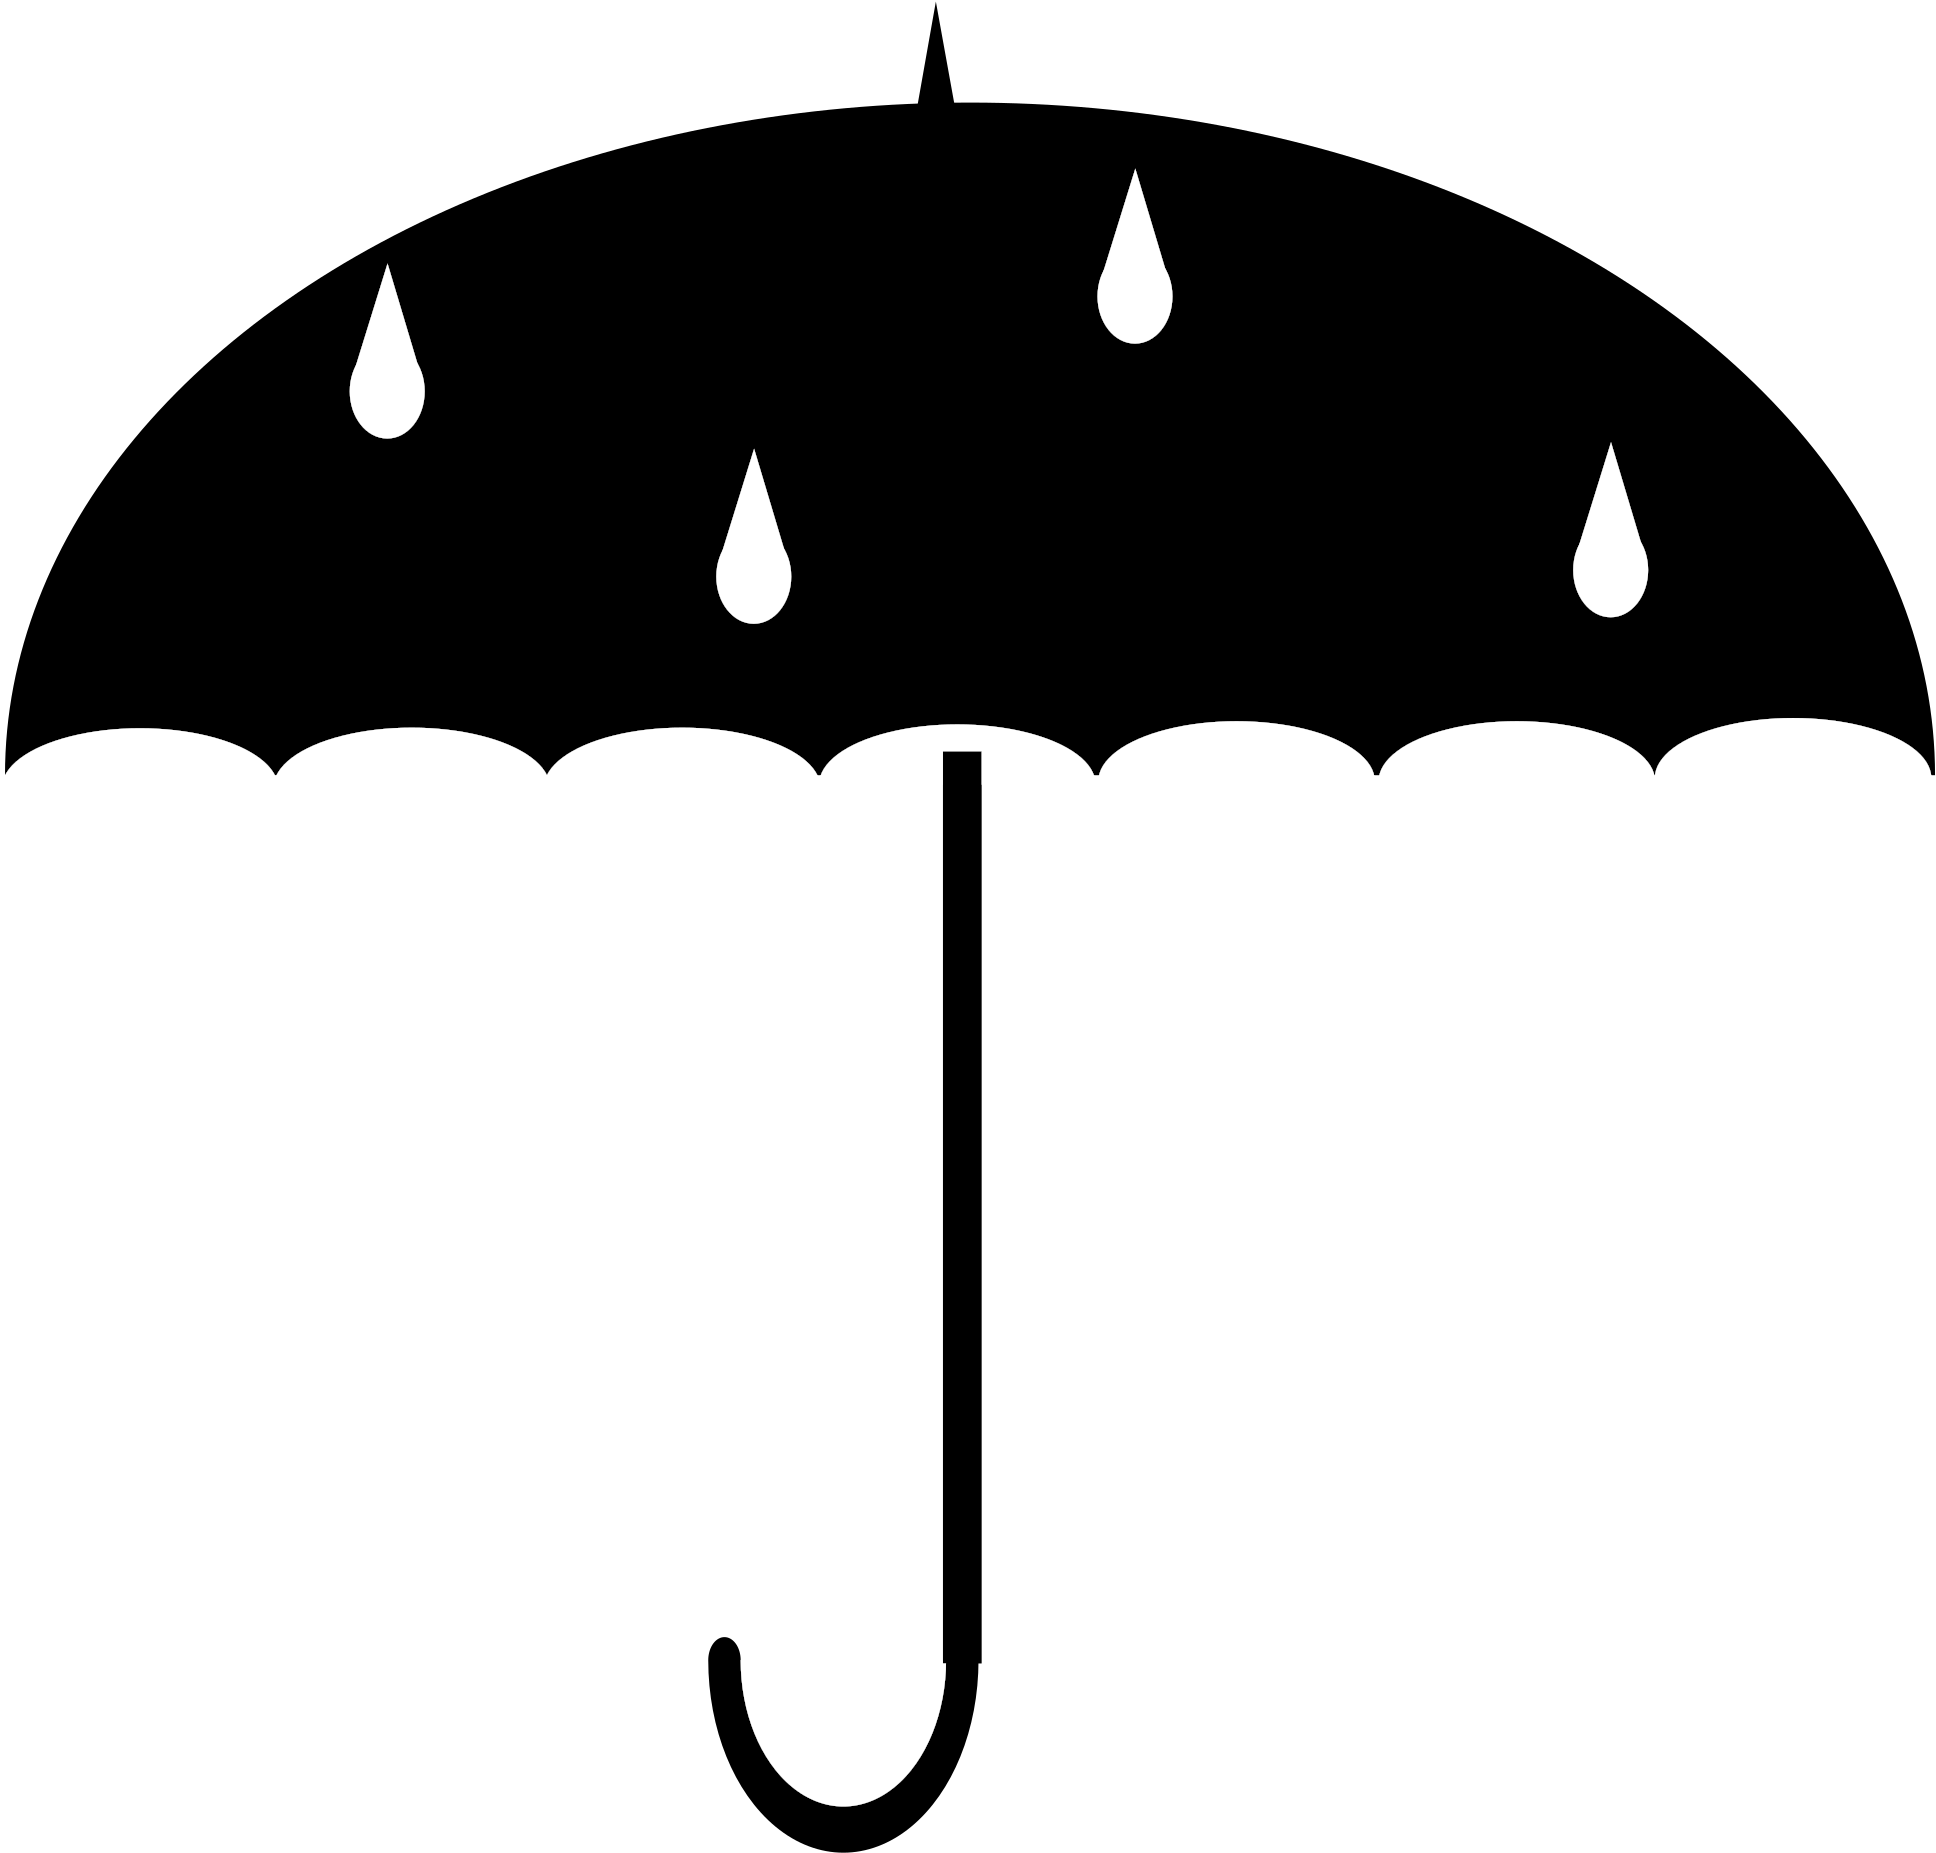 Umbrella Black And White Umbrella Clipart Clipa - Protect From Water. Umbrella. Premium Tee T-shirt (2400x3394)